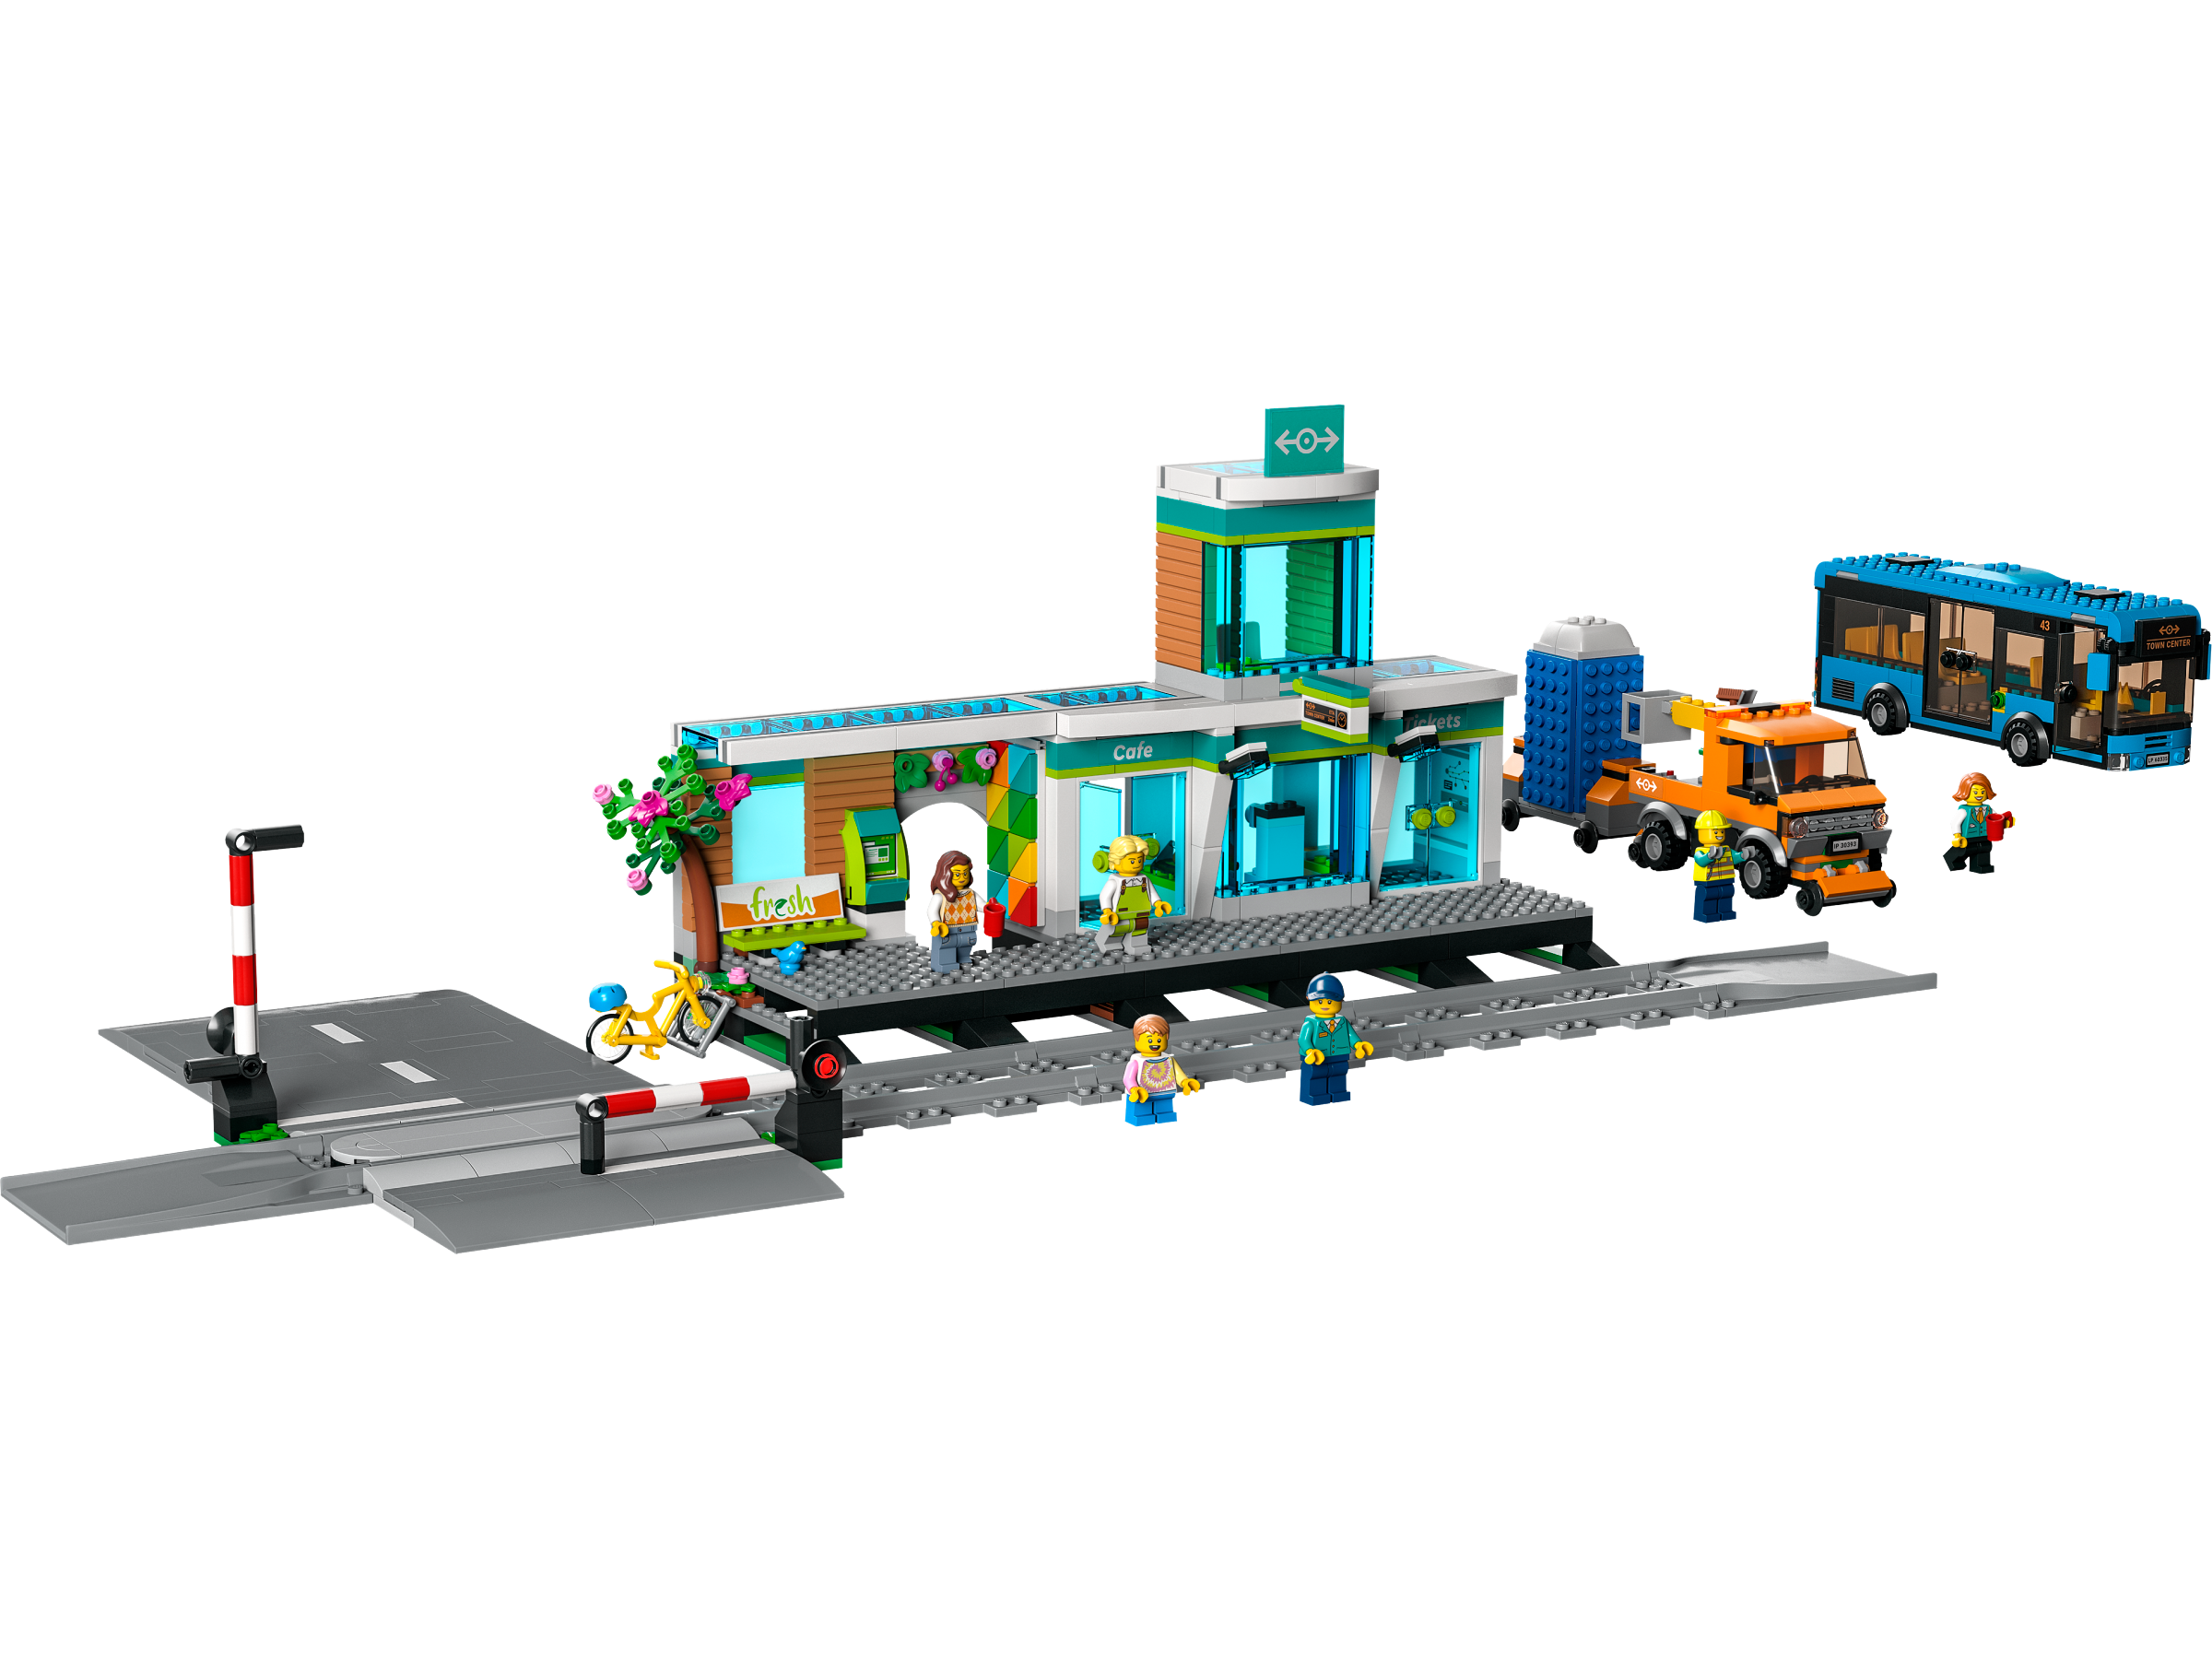 Union Station Lego sites.unimi.it